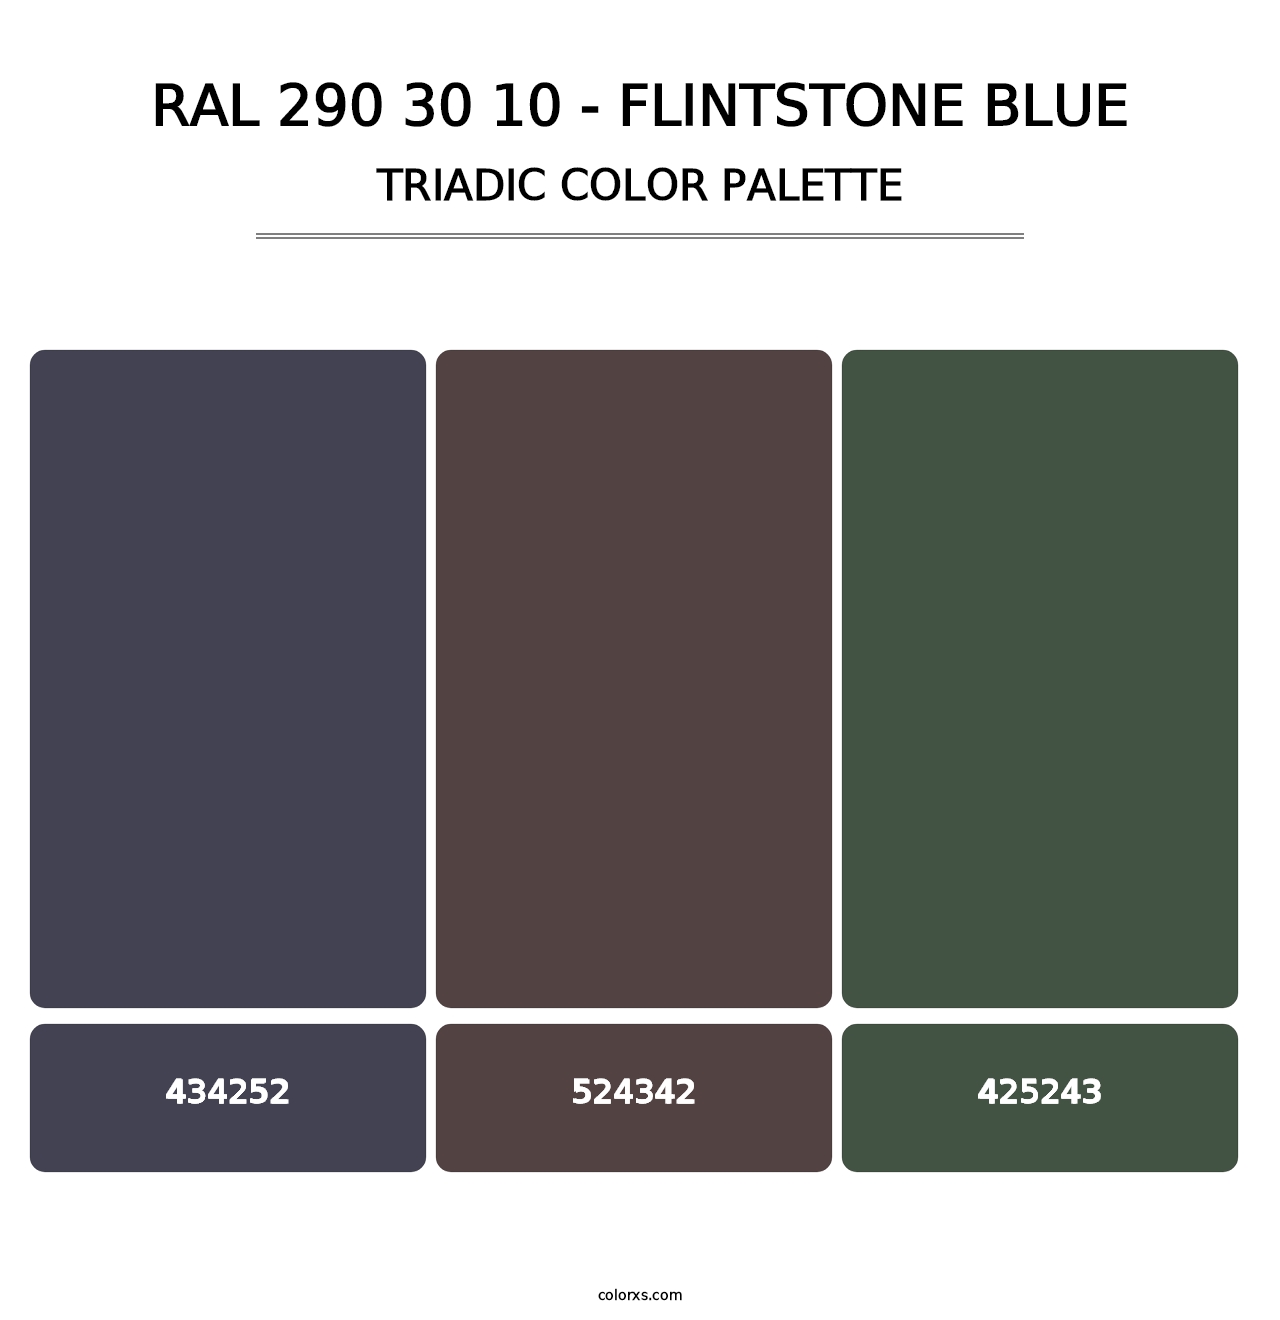 RAL 290 30 10 - Flintstone Blue - Triadic Color Palette